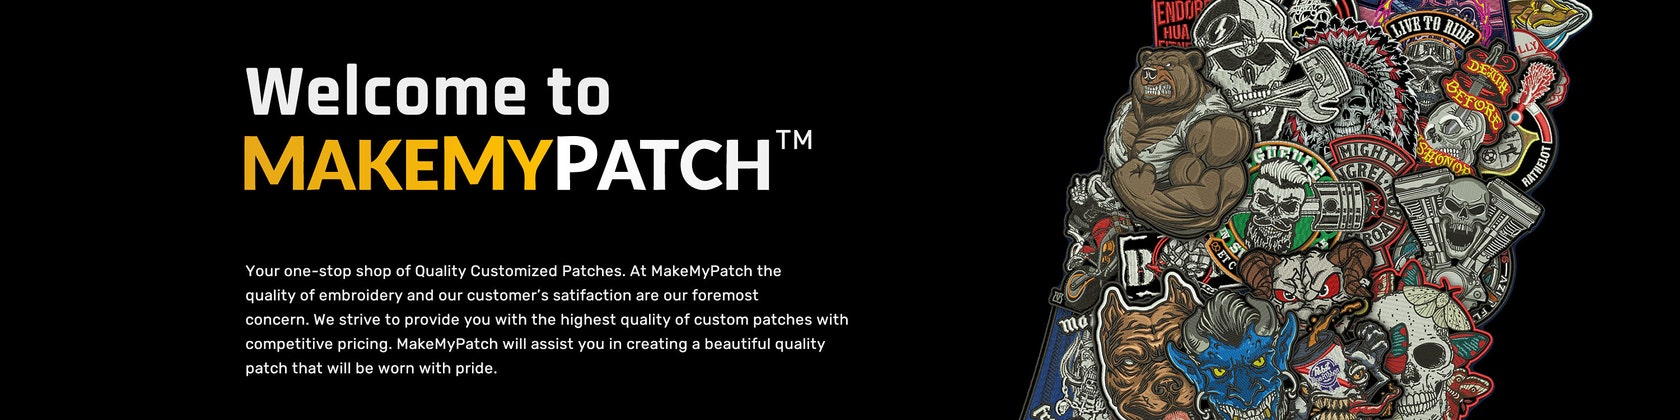 Custom Patches Set for Biker Vest - MakeMyPatch